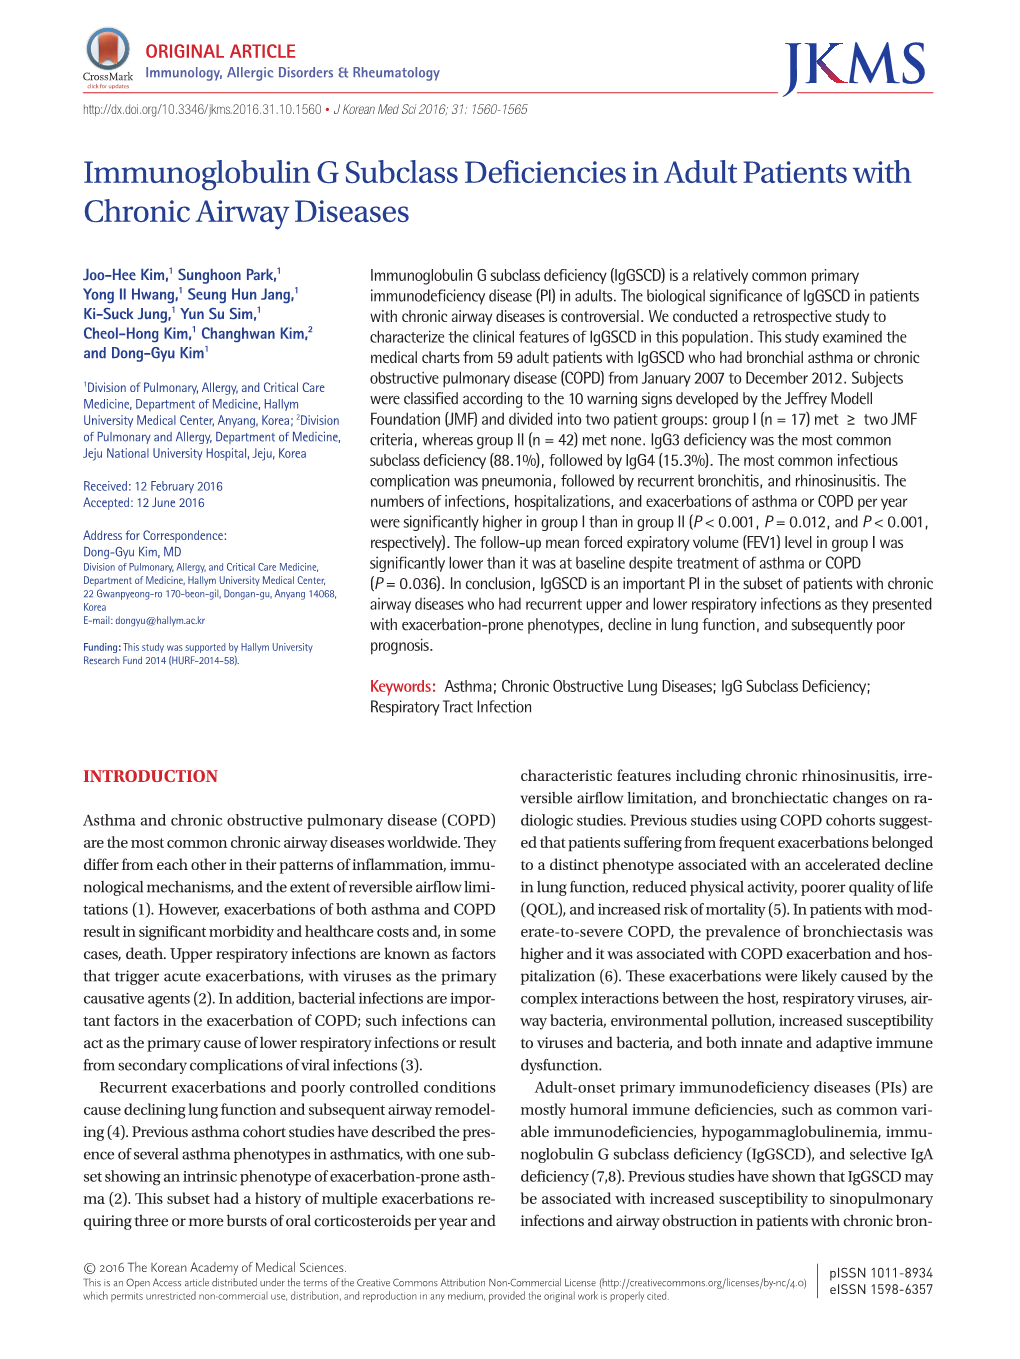 Immunoglobulin G Subclass Deficiencies in Adult Patients with Chronic Airway Diseases